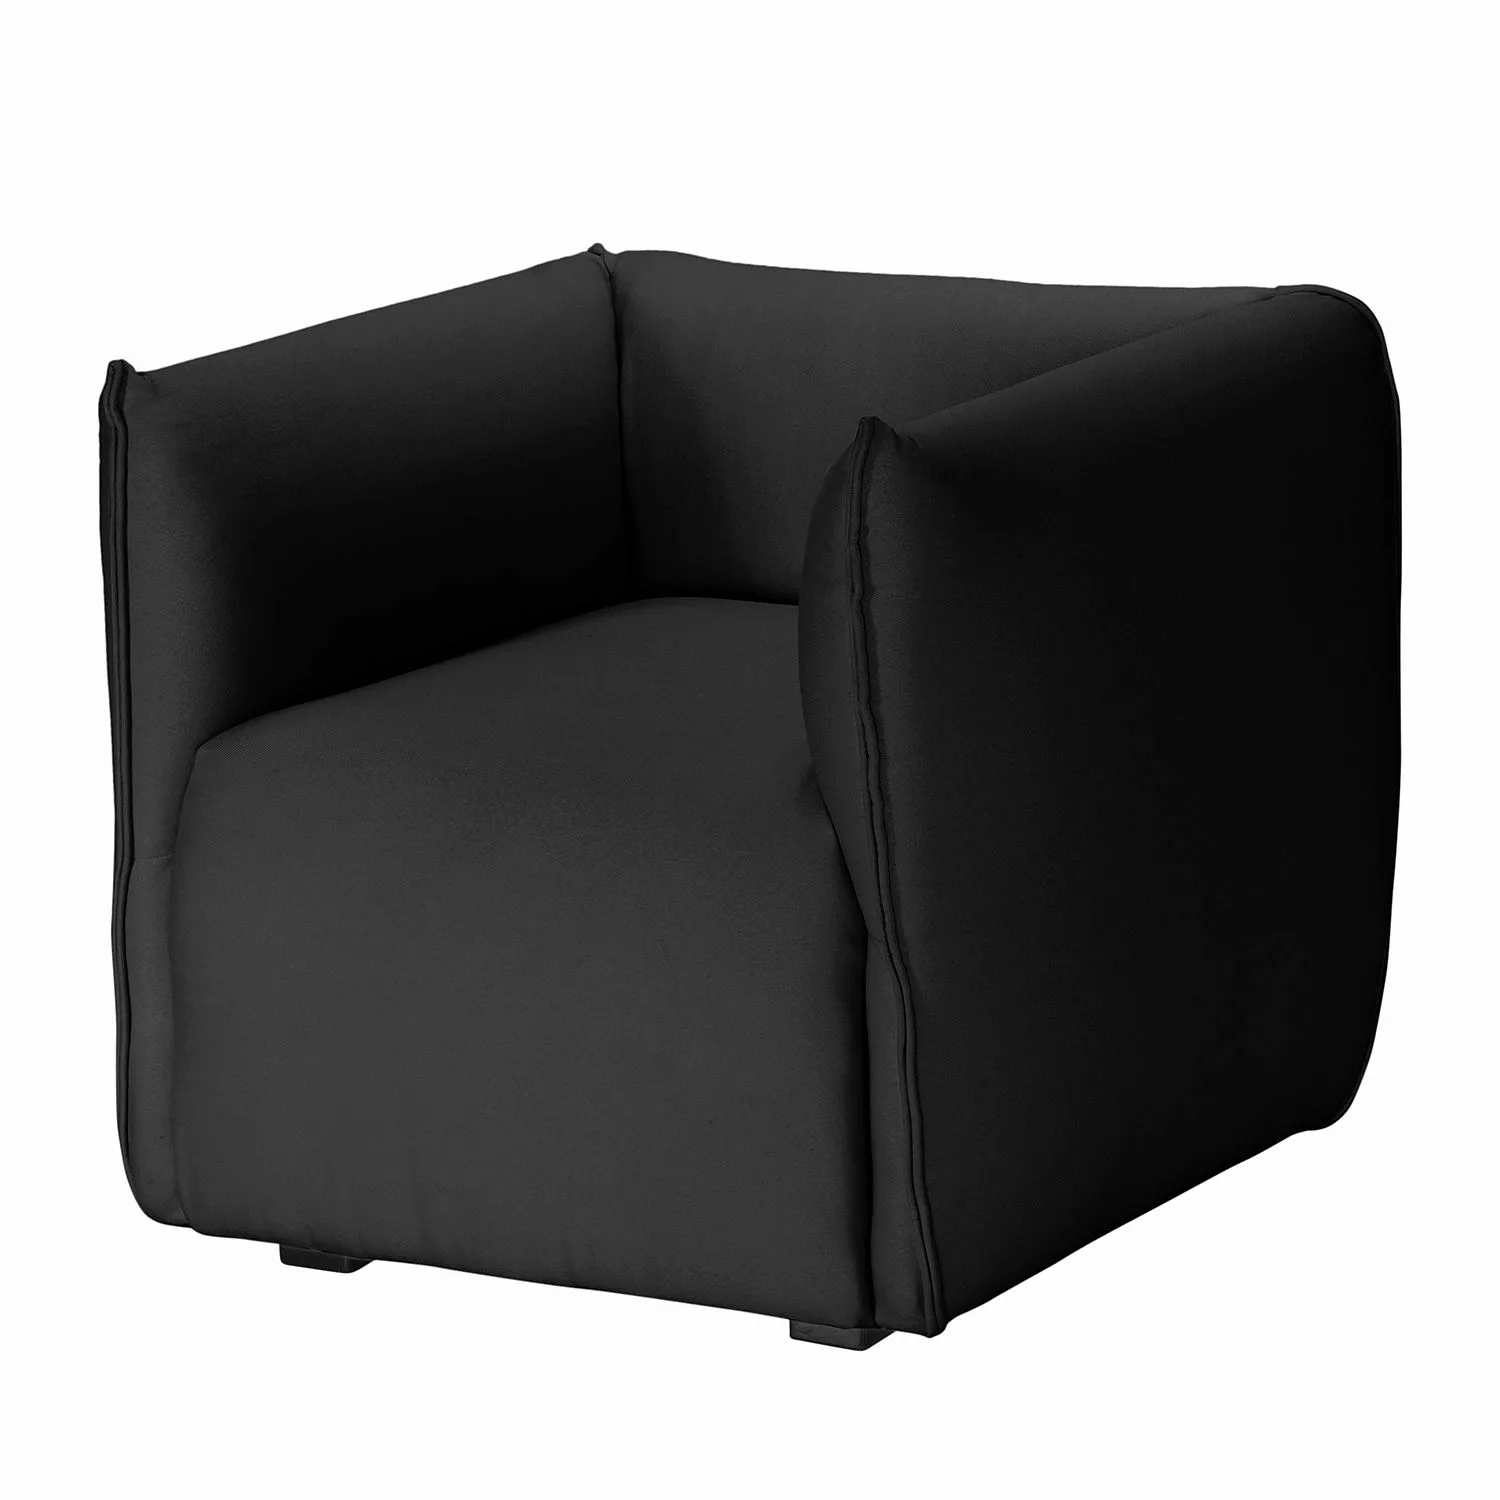 home24 Fredriks Sessel Grady I Rot Webstoff mit Hocker 84x70x78 cm (BxHxT) günstig online kaufen